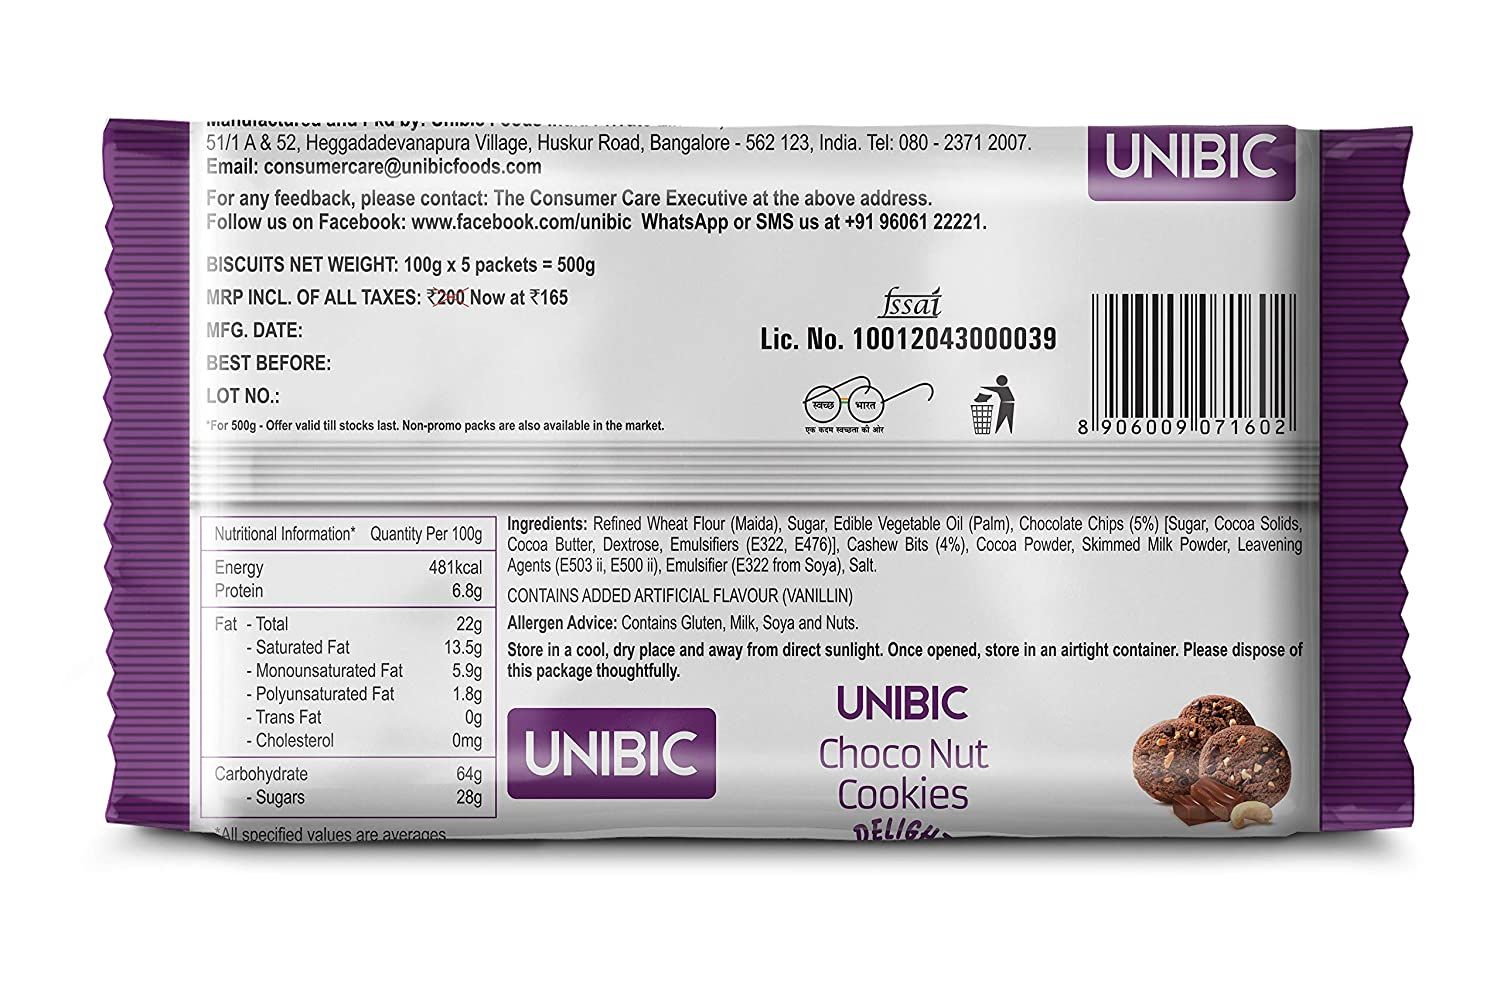 Unibic Choco Nut Cookie Image